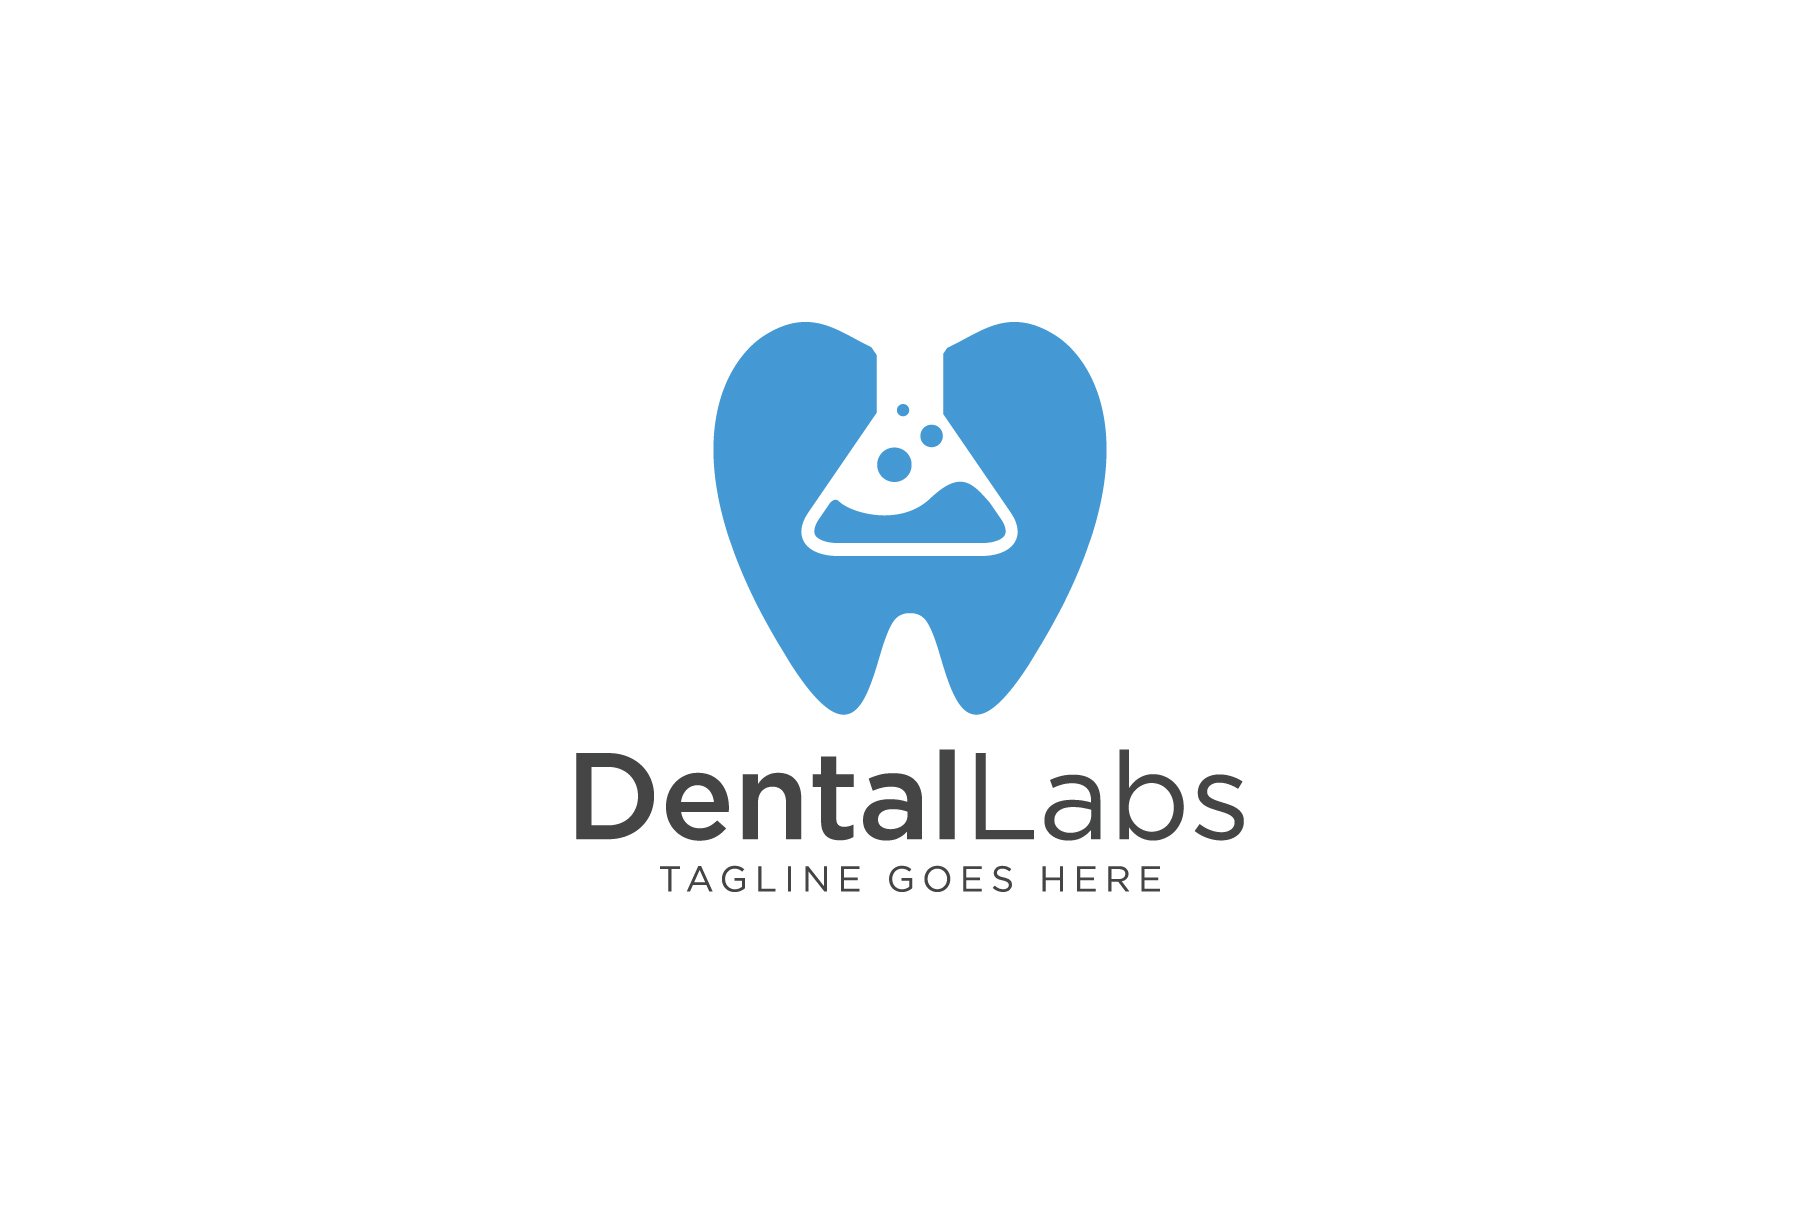 Dental Labs Logo preview image.